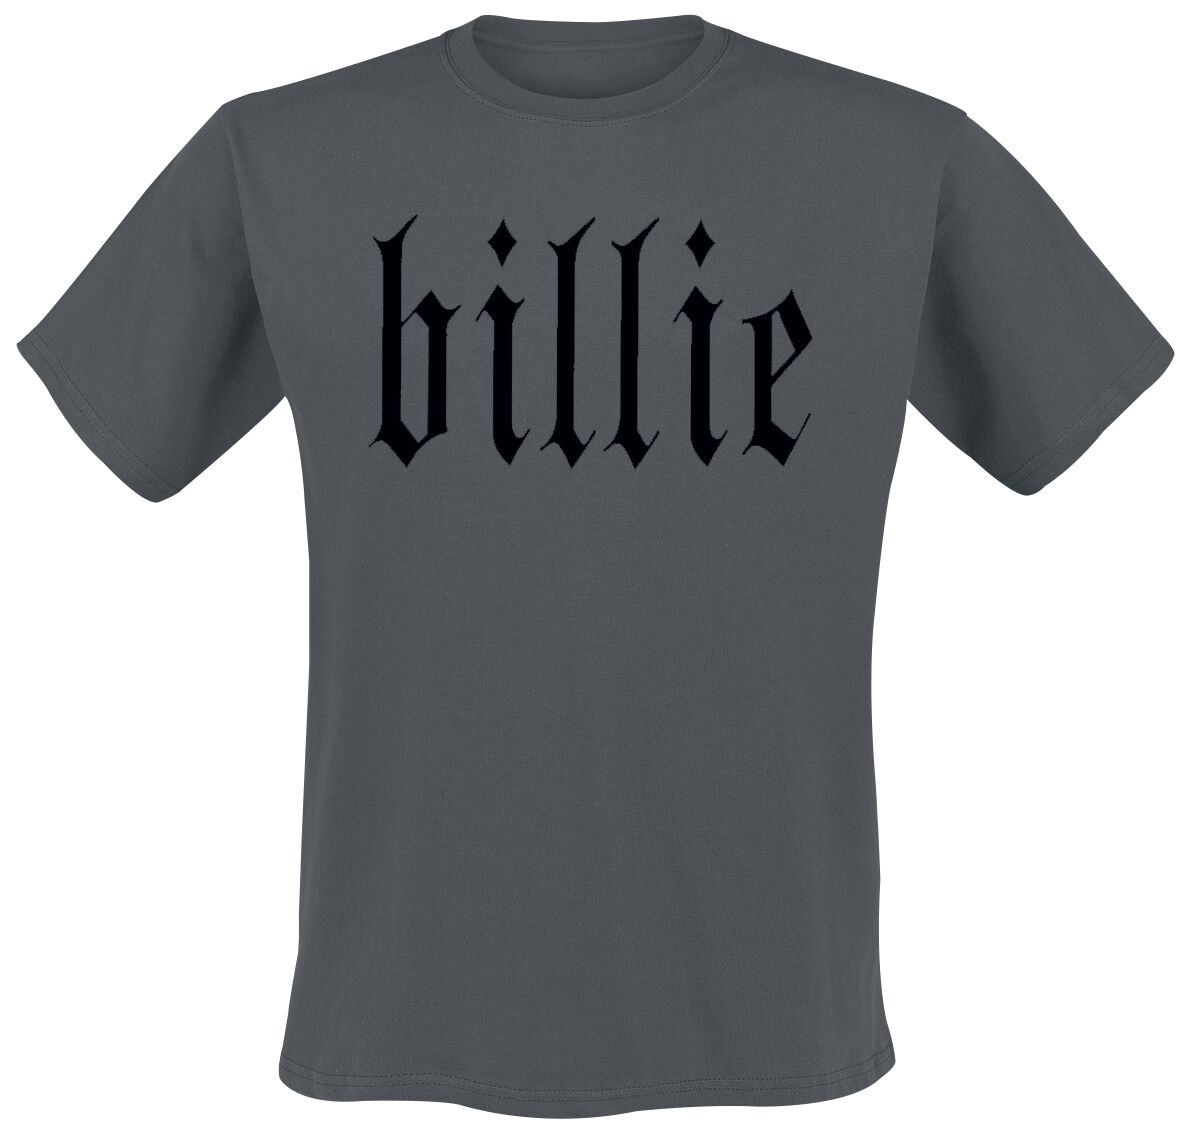 Image of Eilish, Billie Billie Emblem T-Shirt charcoal